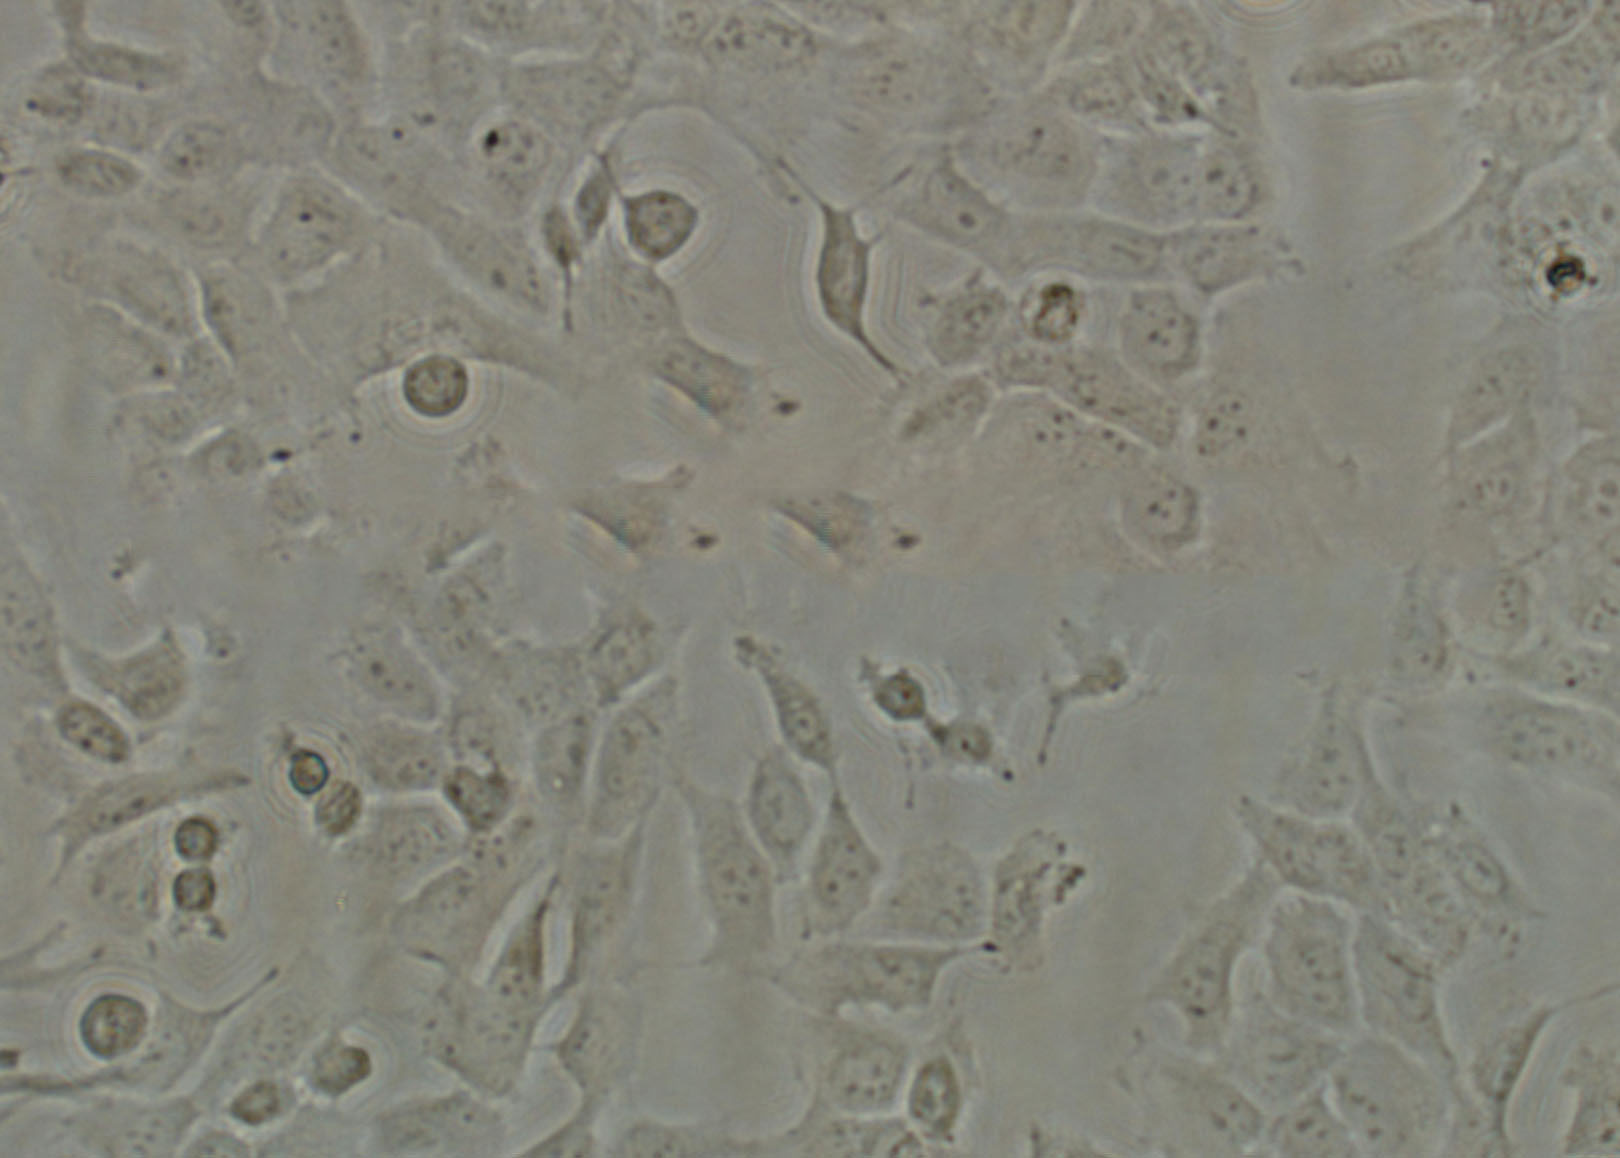 HTh74 cell line人未分化甲状腺癌细胞系,HTh74 cell line